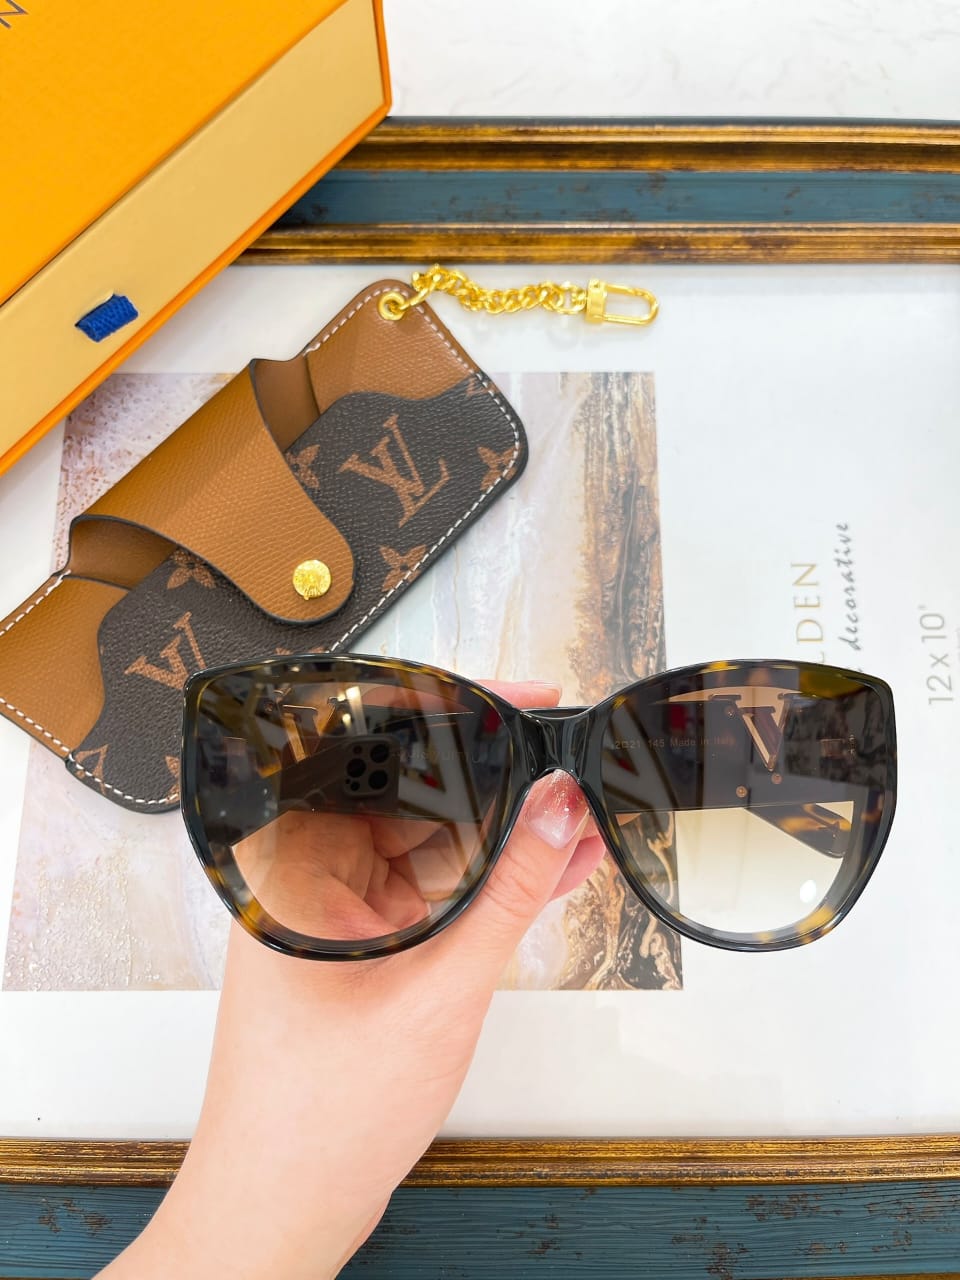 Louis Vuitton Brown Tortoise My Fair Lady Cat Eye Sunglasses